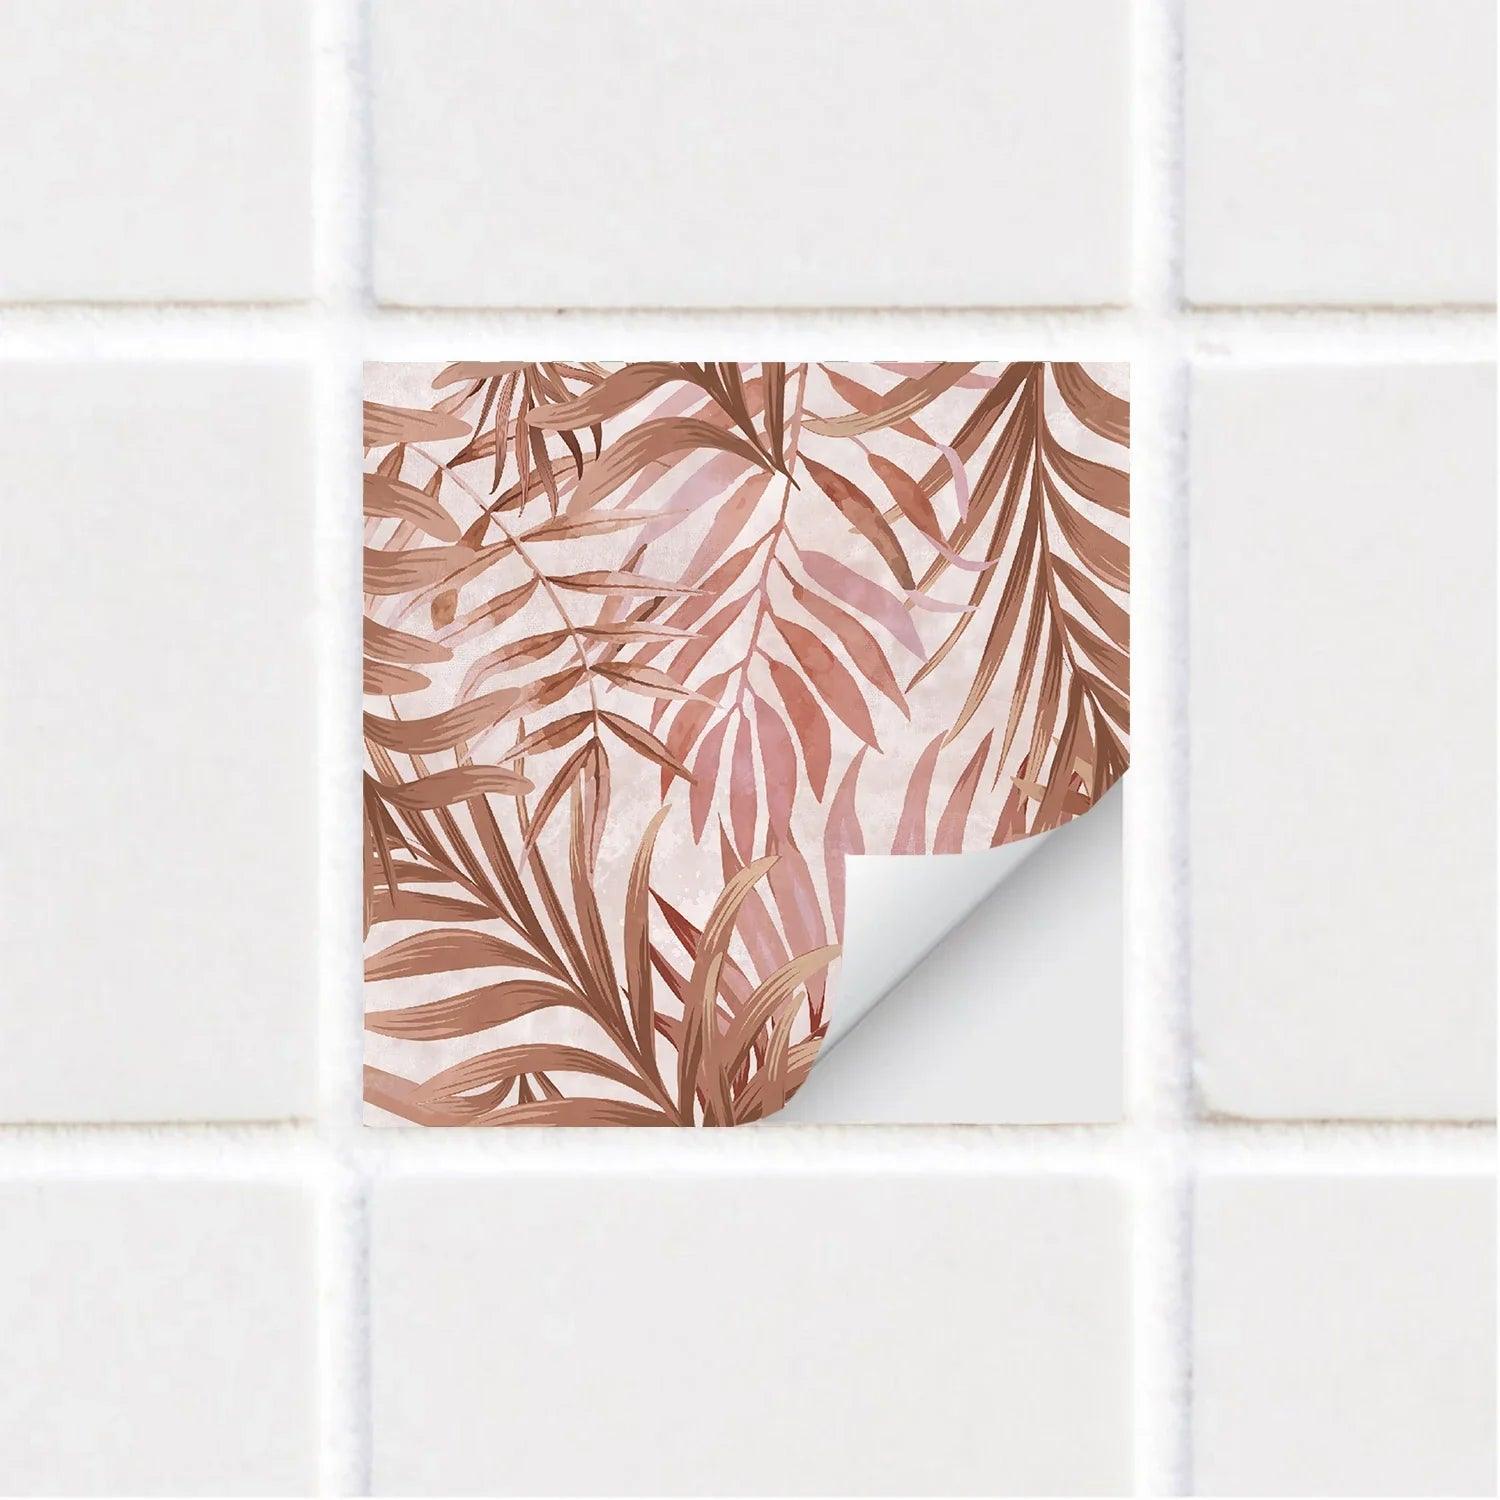 Salmon Botanical Leaves Self-Adhesive Textured Vinyl Tiles Stickers - artwallmelbourne